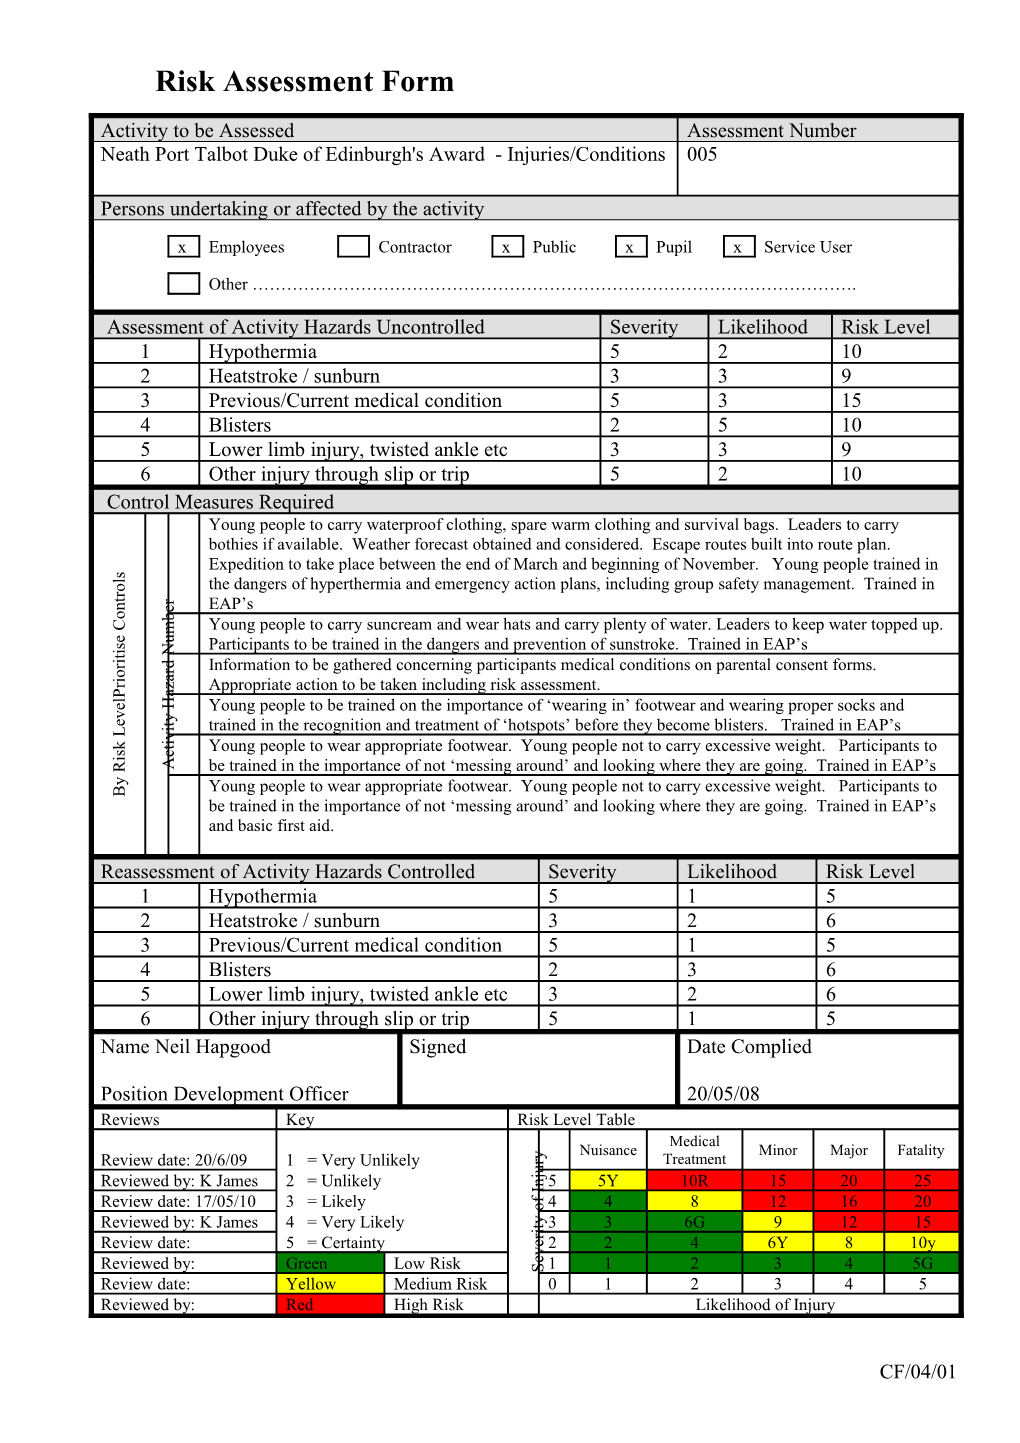 Risk Assessment Form s13